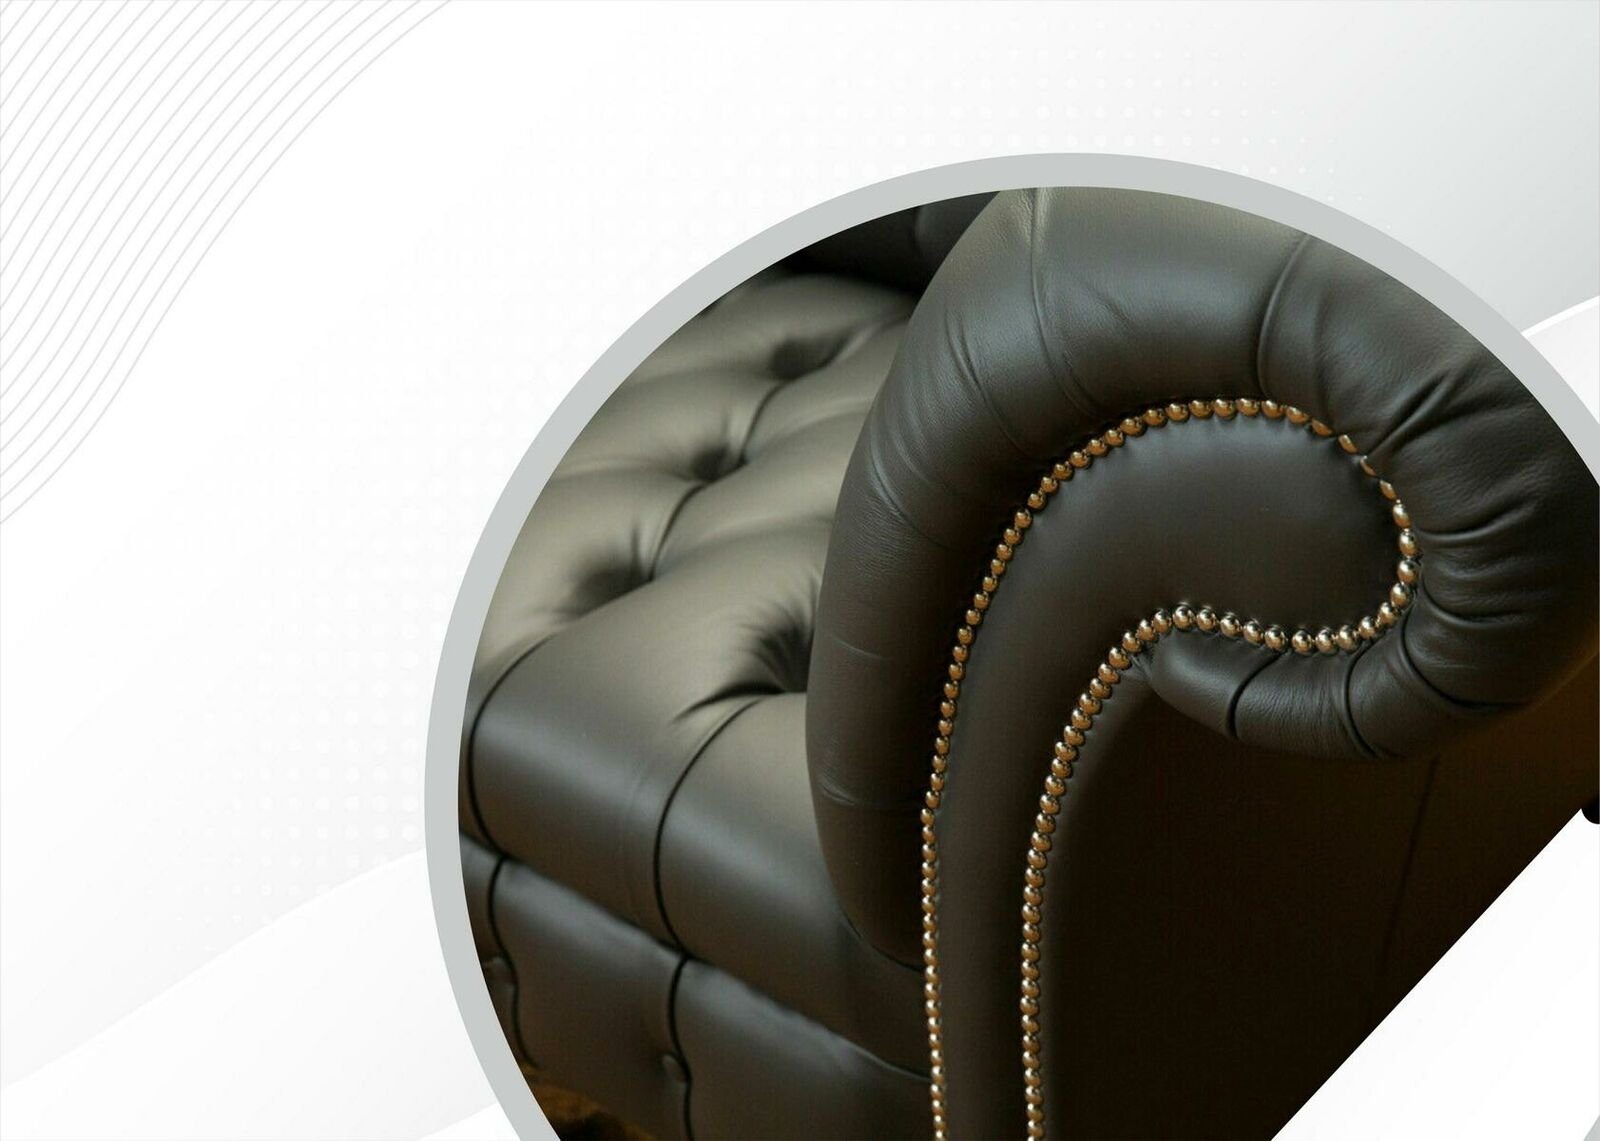 Sofa Dunkelgrau JVmoebel Modern 4 Couchen Möbel Chesterfield-Sofa, Design Sitzer xxl Chesterfield Leder big